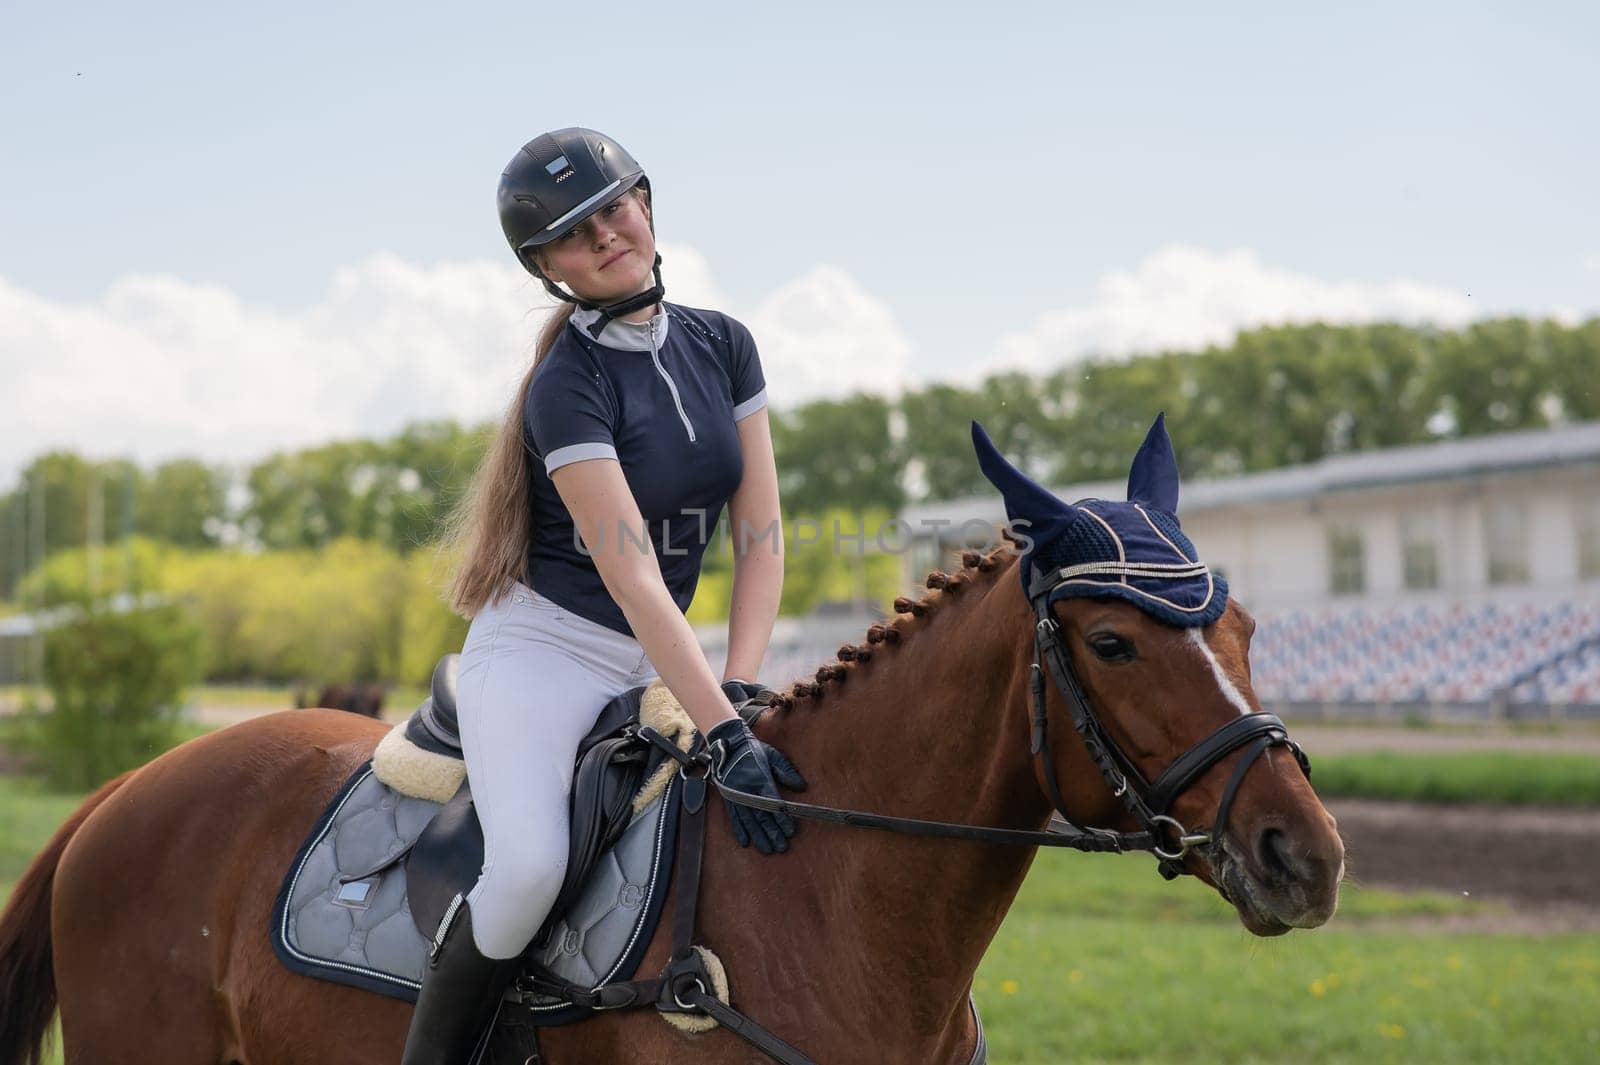 Portrait of a girl jockey riding a horse